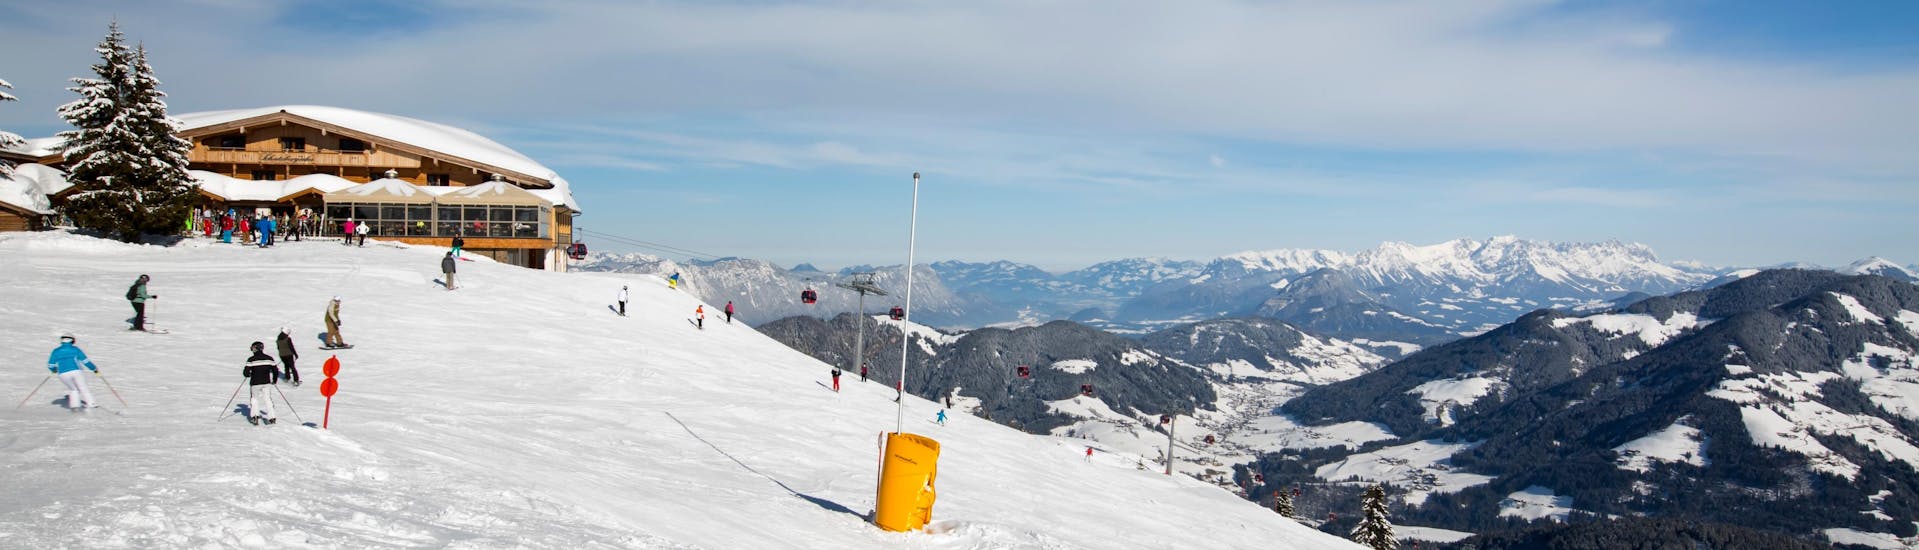 Adults and kids skiing in Wildschonau ski resort.